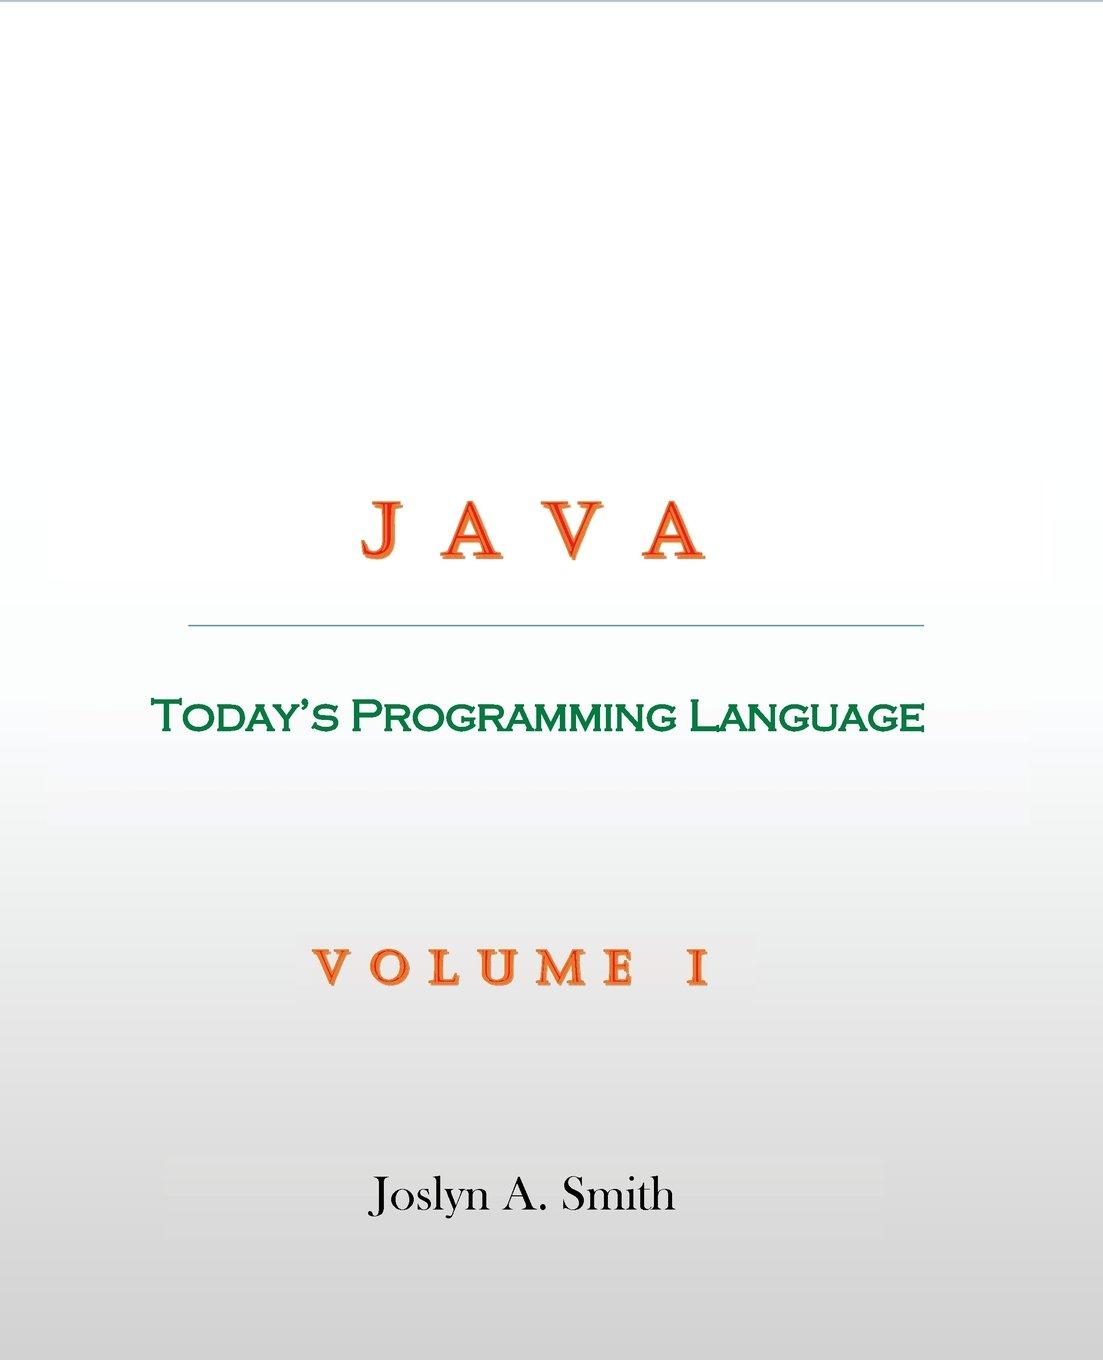 java todays programming language volume 1 1st edition joslyn a smith 0997817216, 978-0997817218